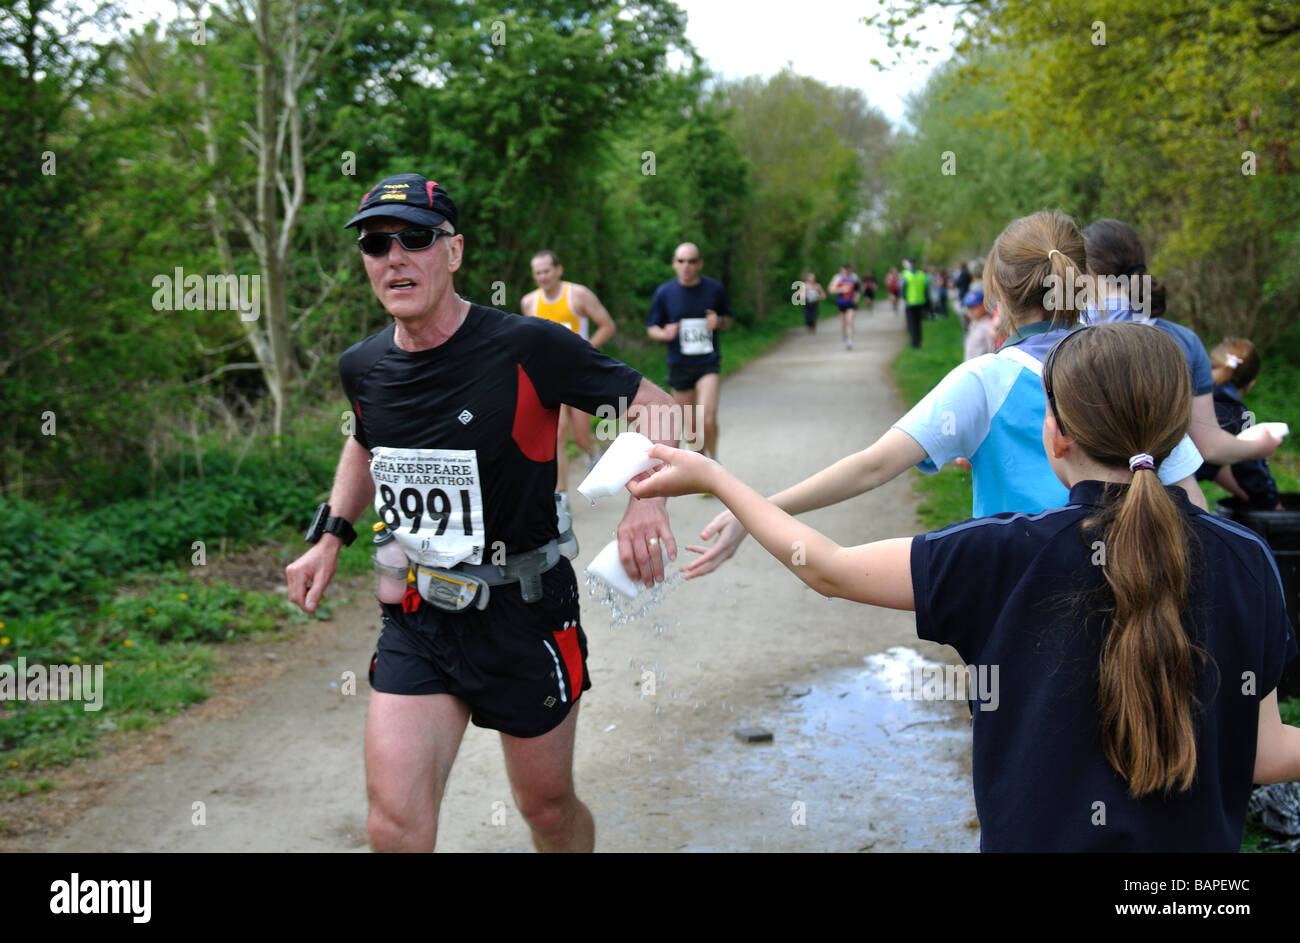 Wet sponges handed out at a marathon race, UK Stock Photo